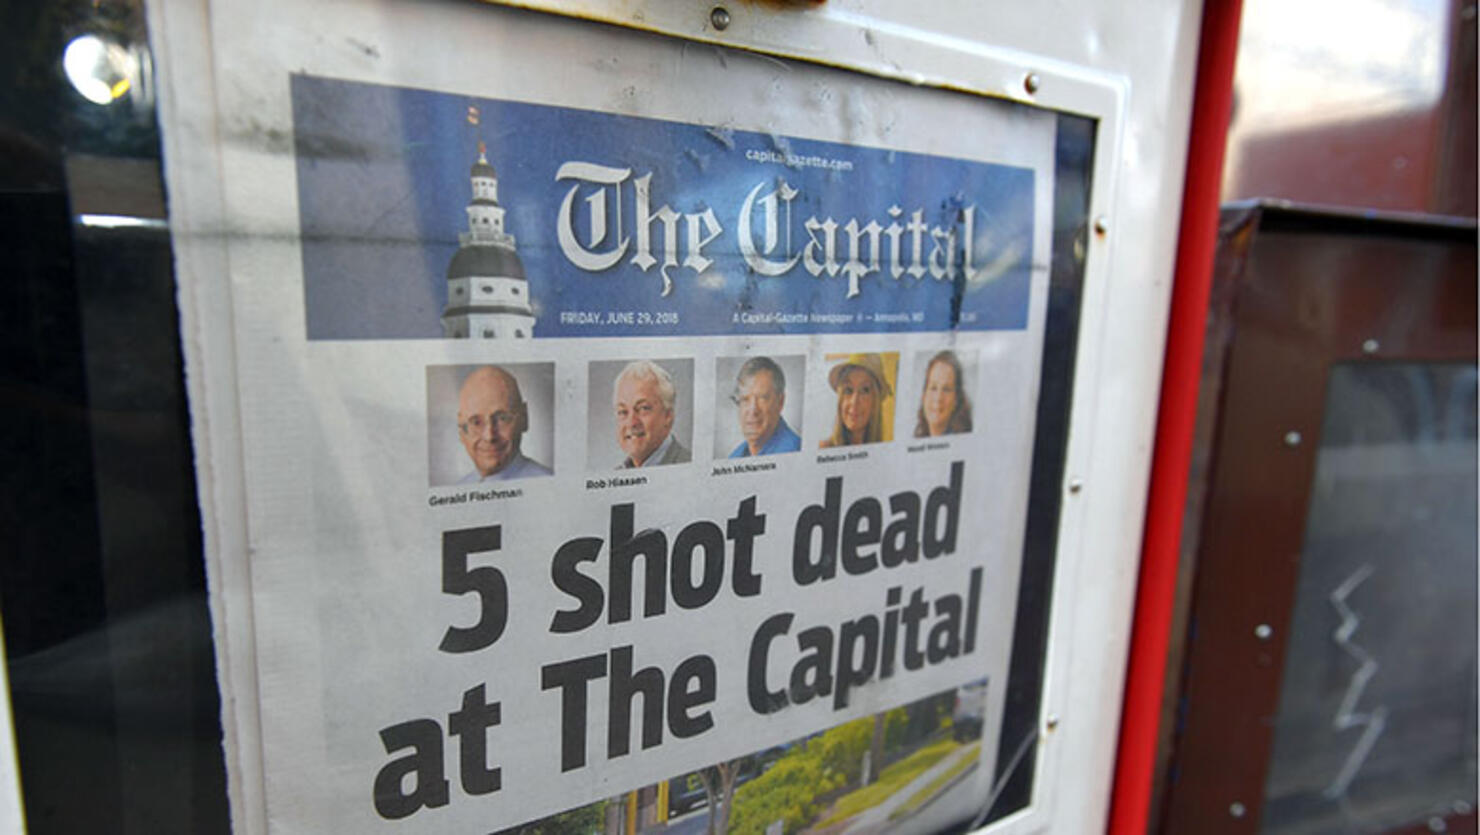 The Capital Gazette